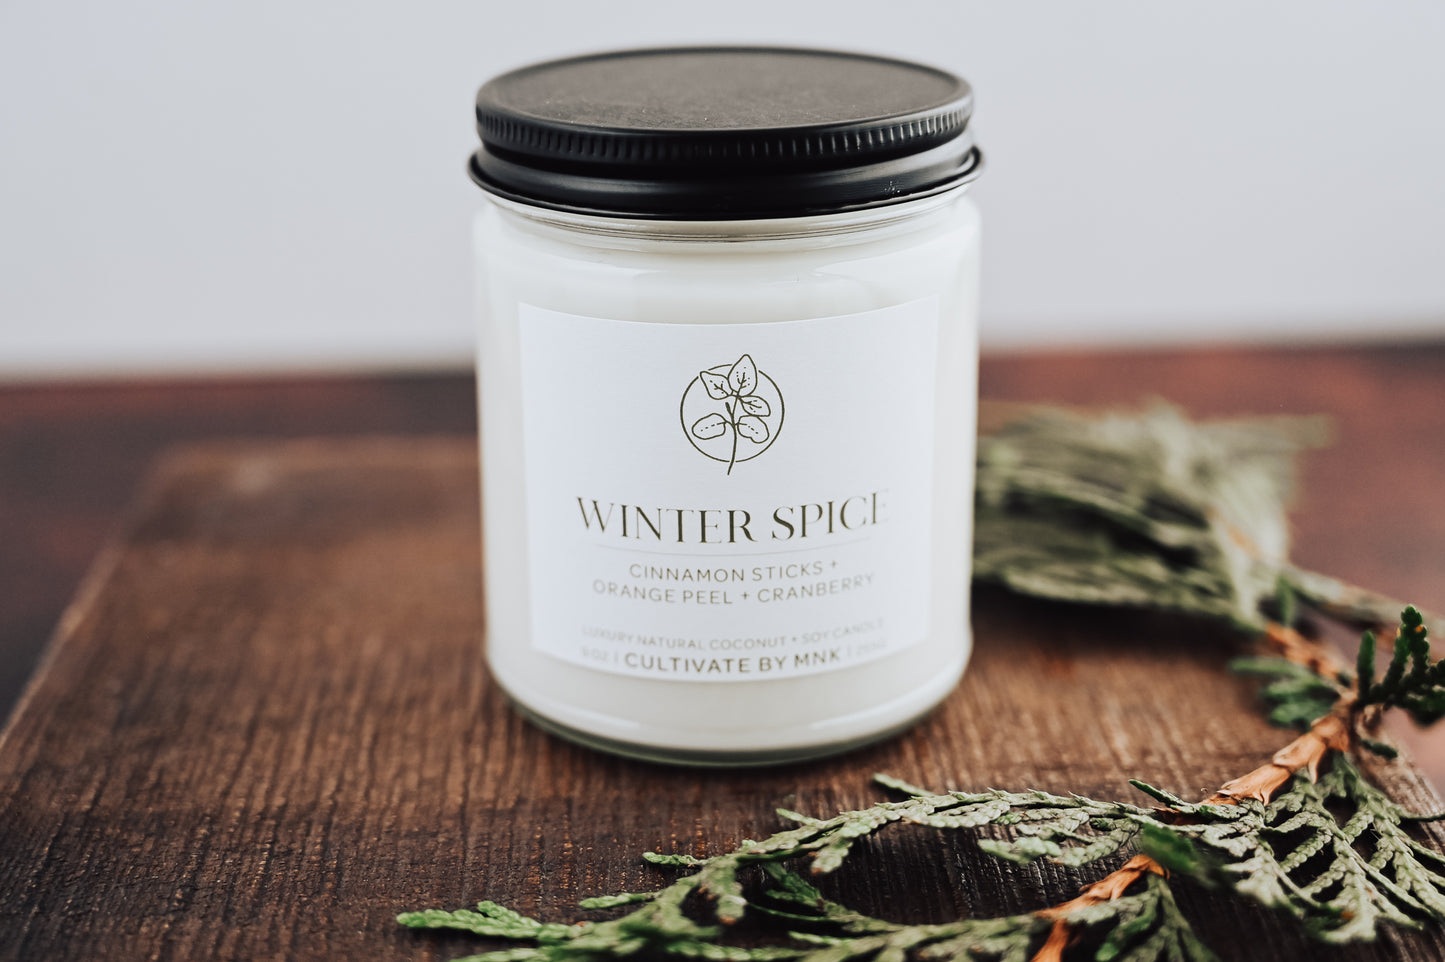 Winter Spice